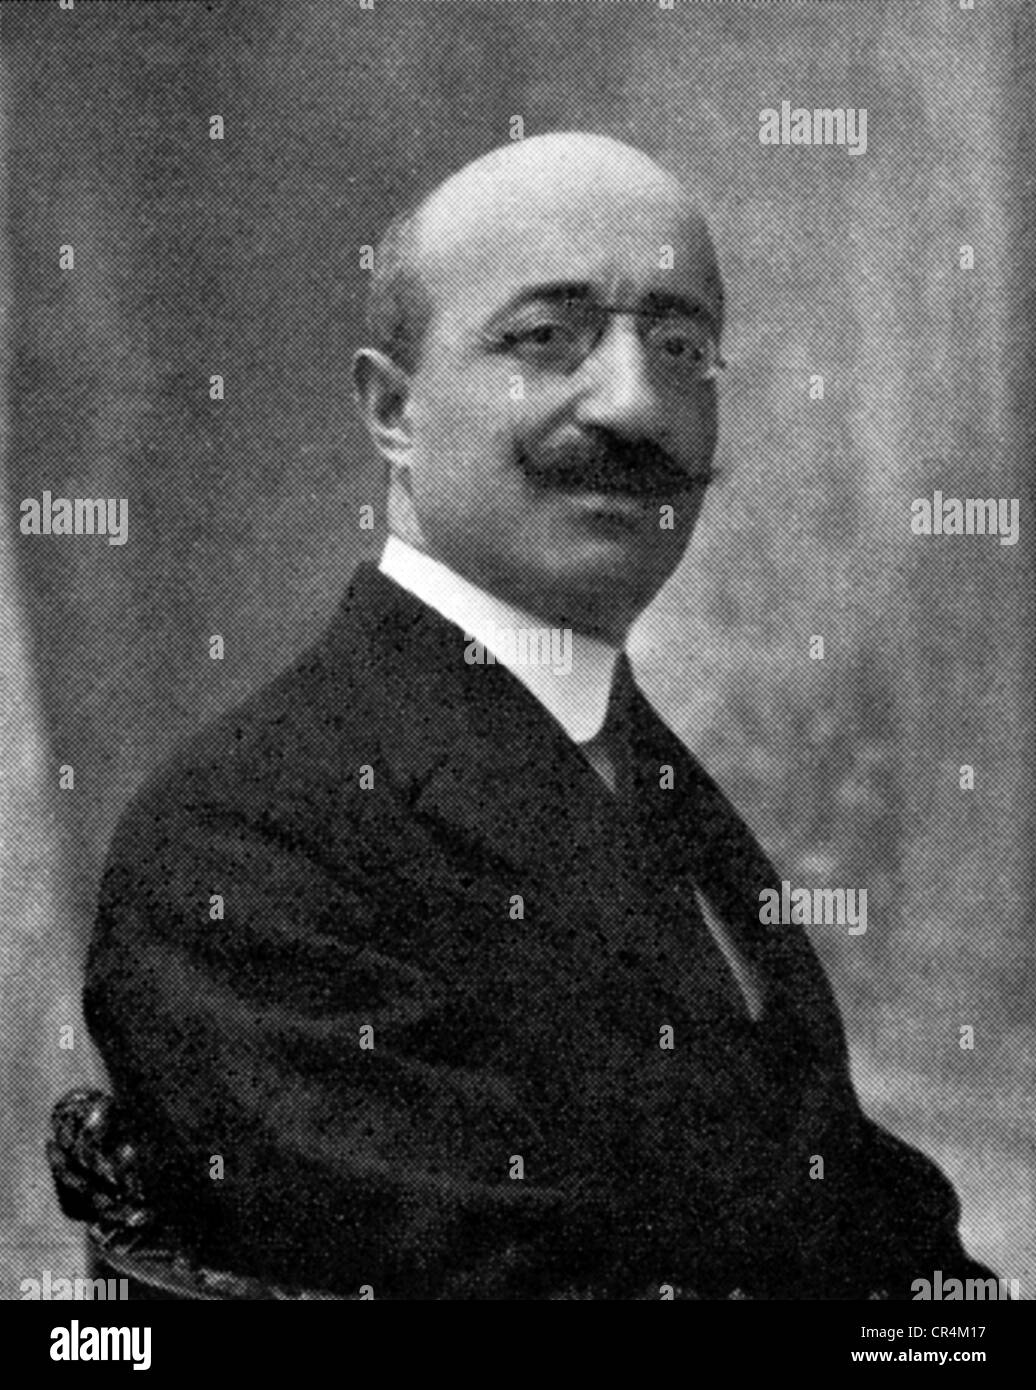 Cilea, Francesco, 29.7.1866 - 20.11.1950, Italian composer, portrait, photo, circa 1910, Stock Photo